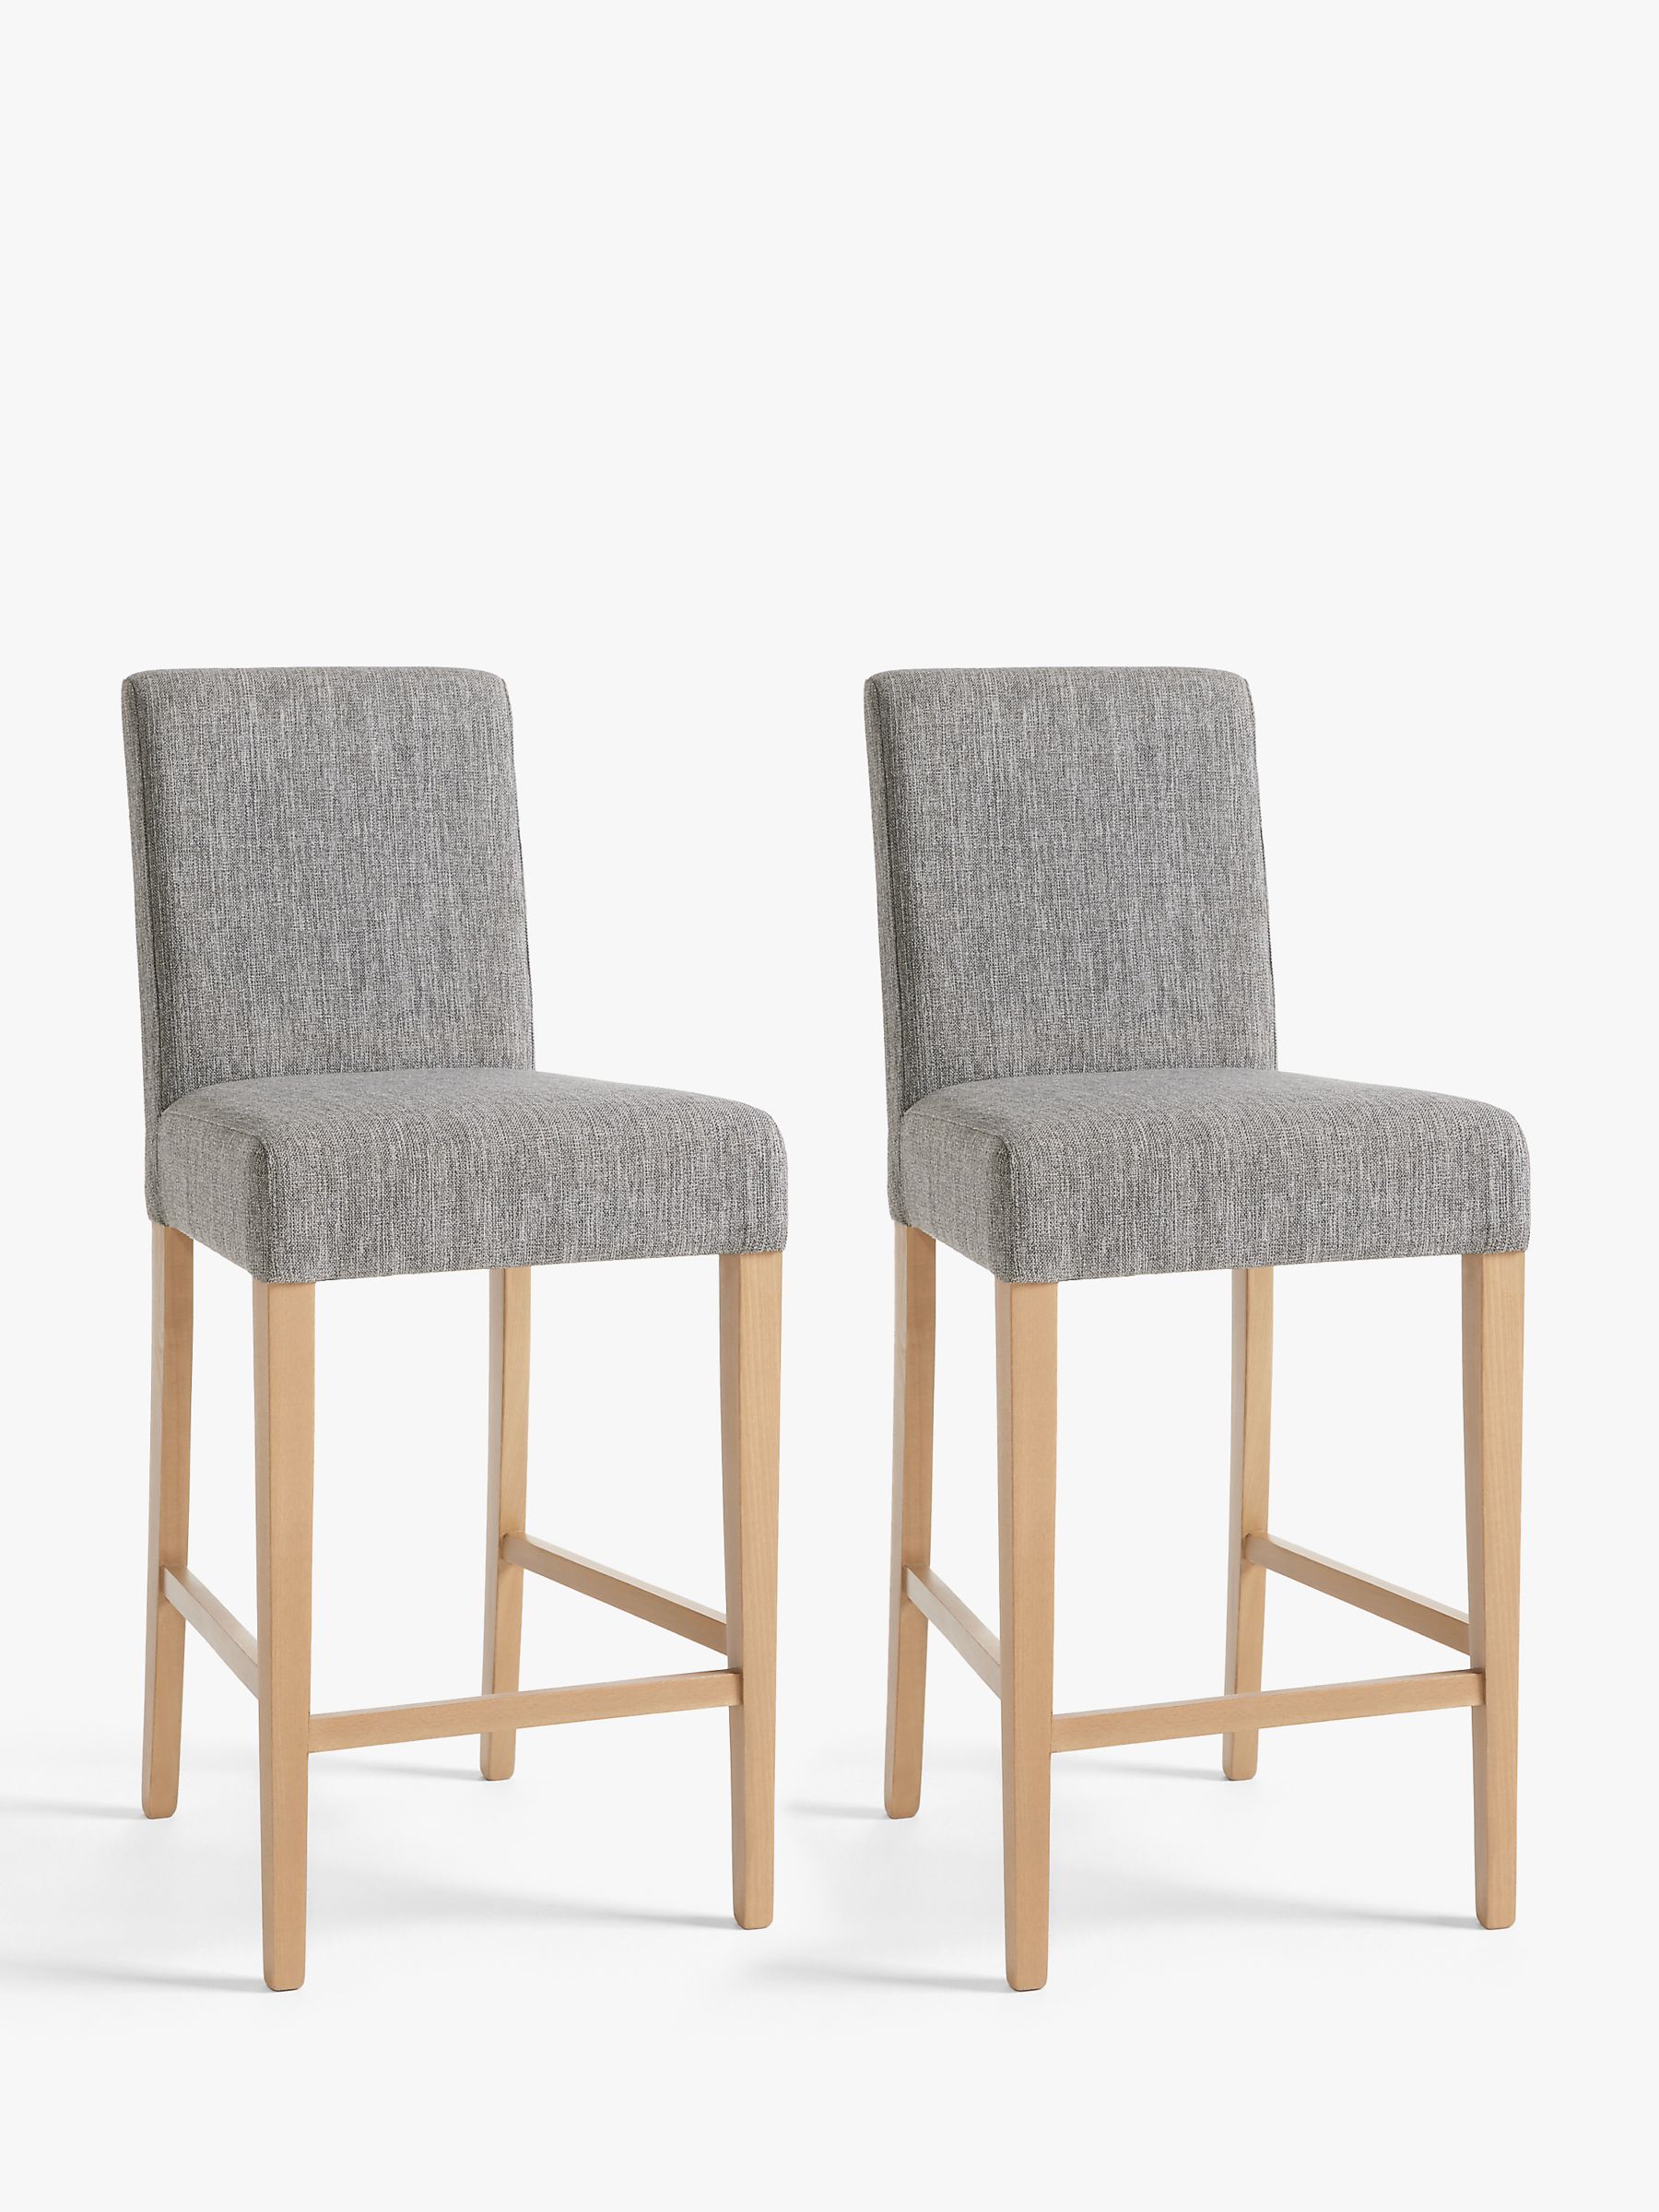 Photo of John lewis anyday slender fabric seat bar stool pair